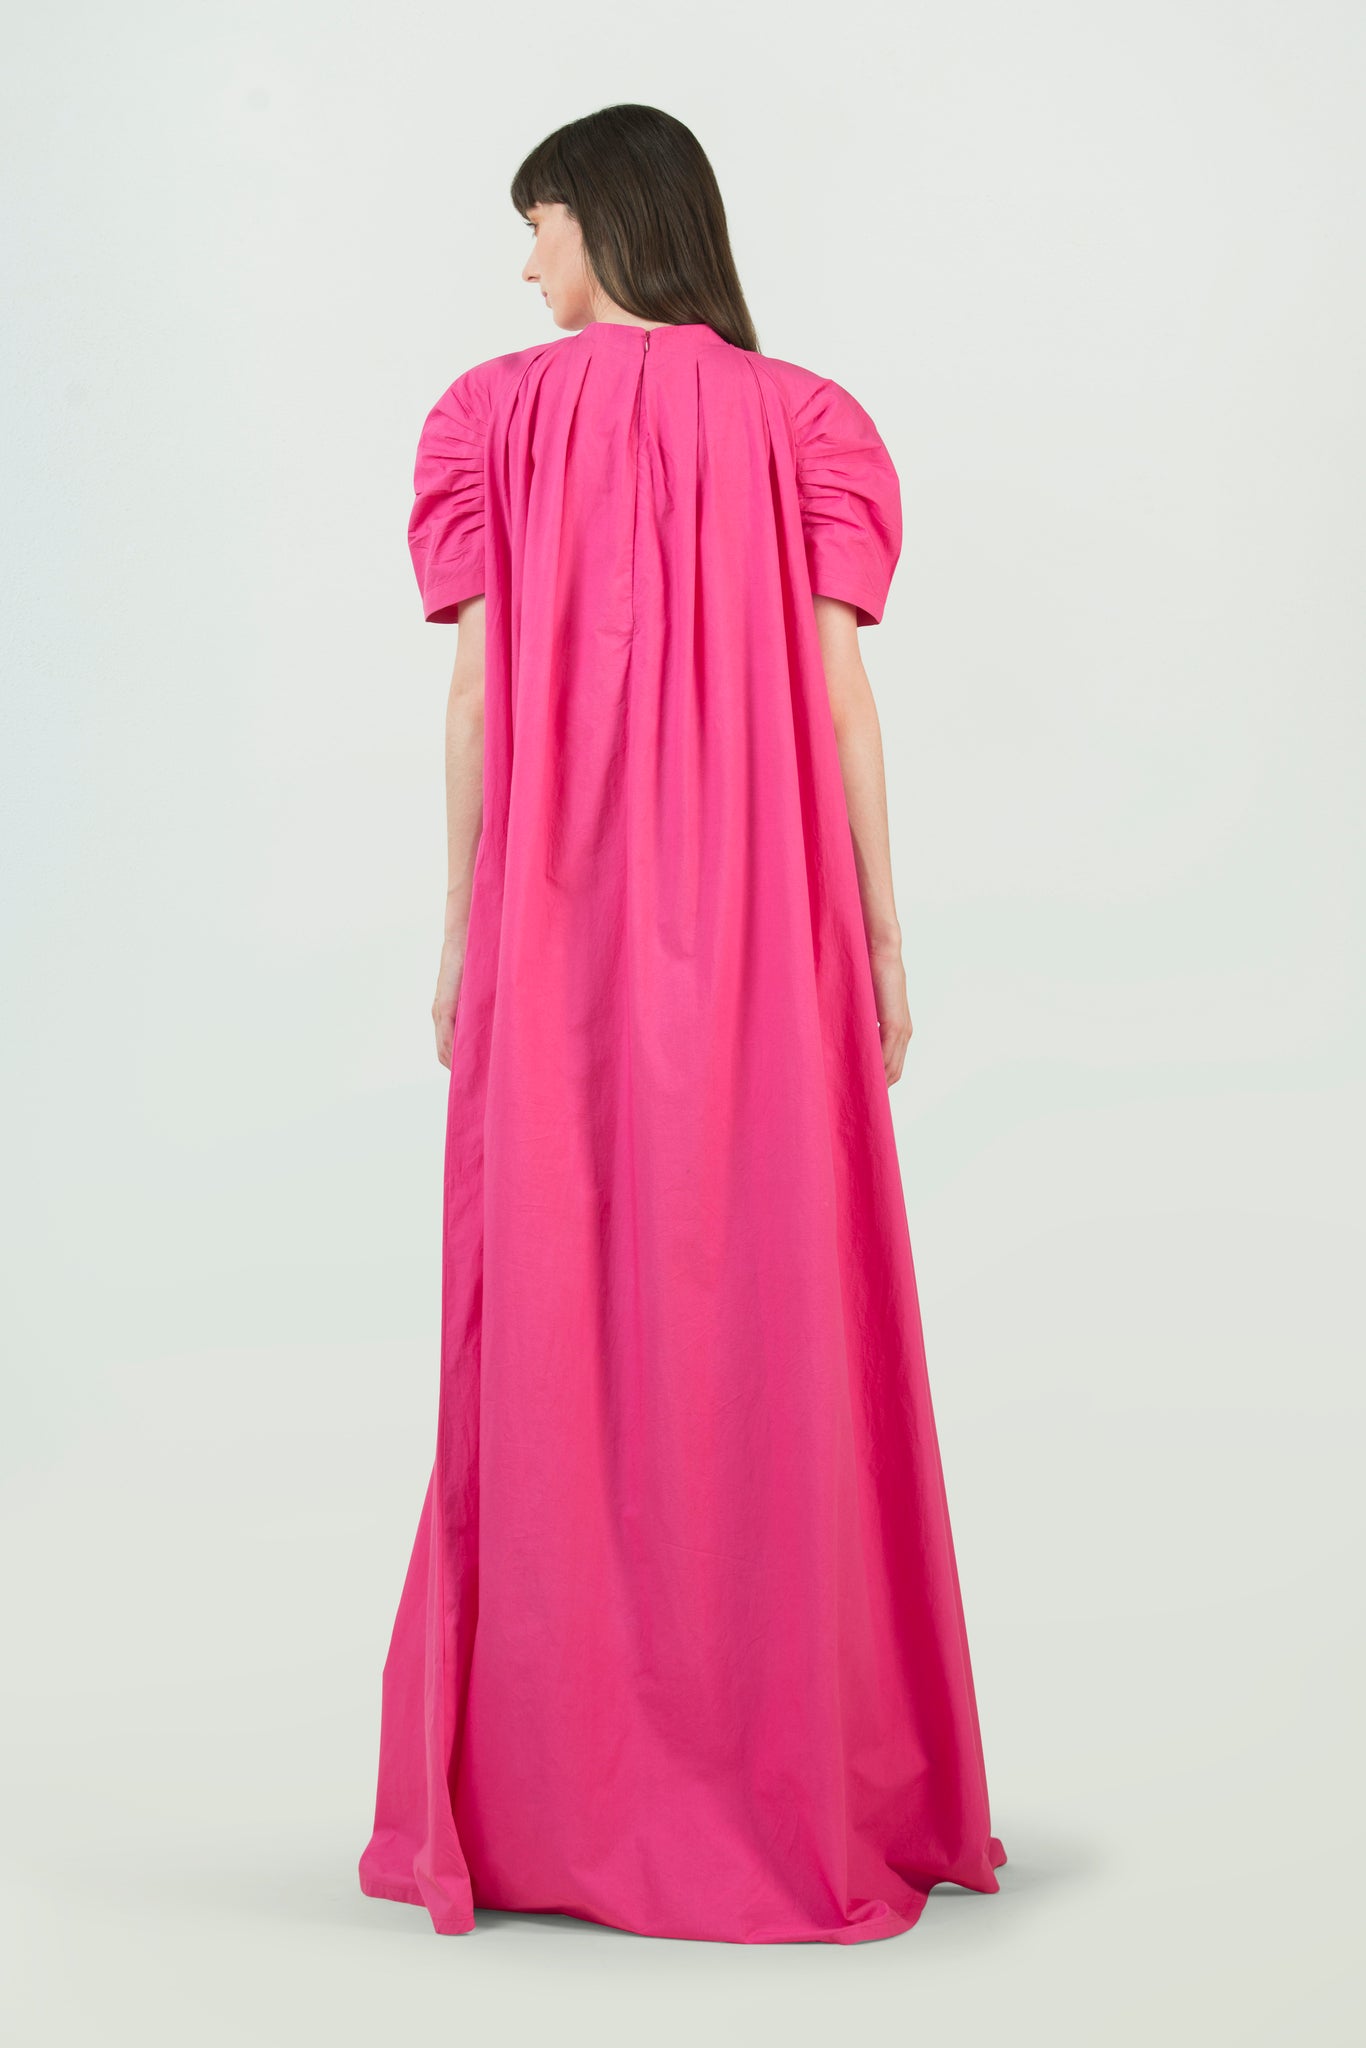 Pink Supima Cotton Long Dress - AGAATI